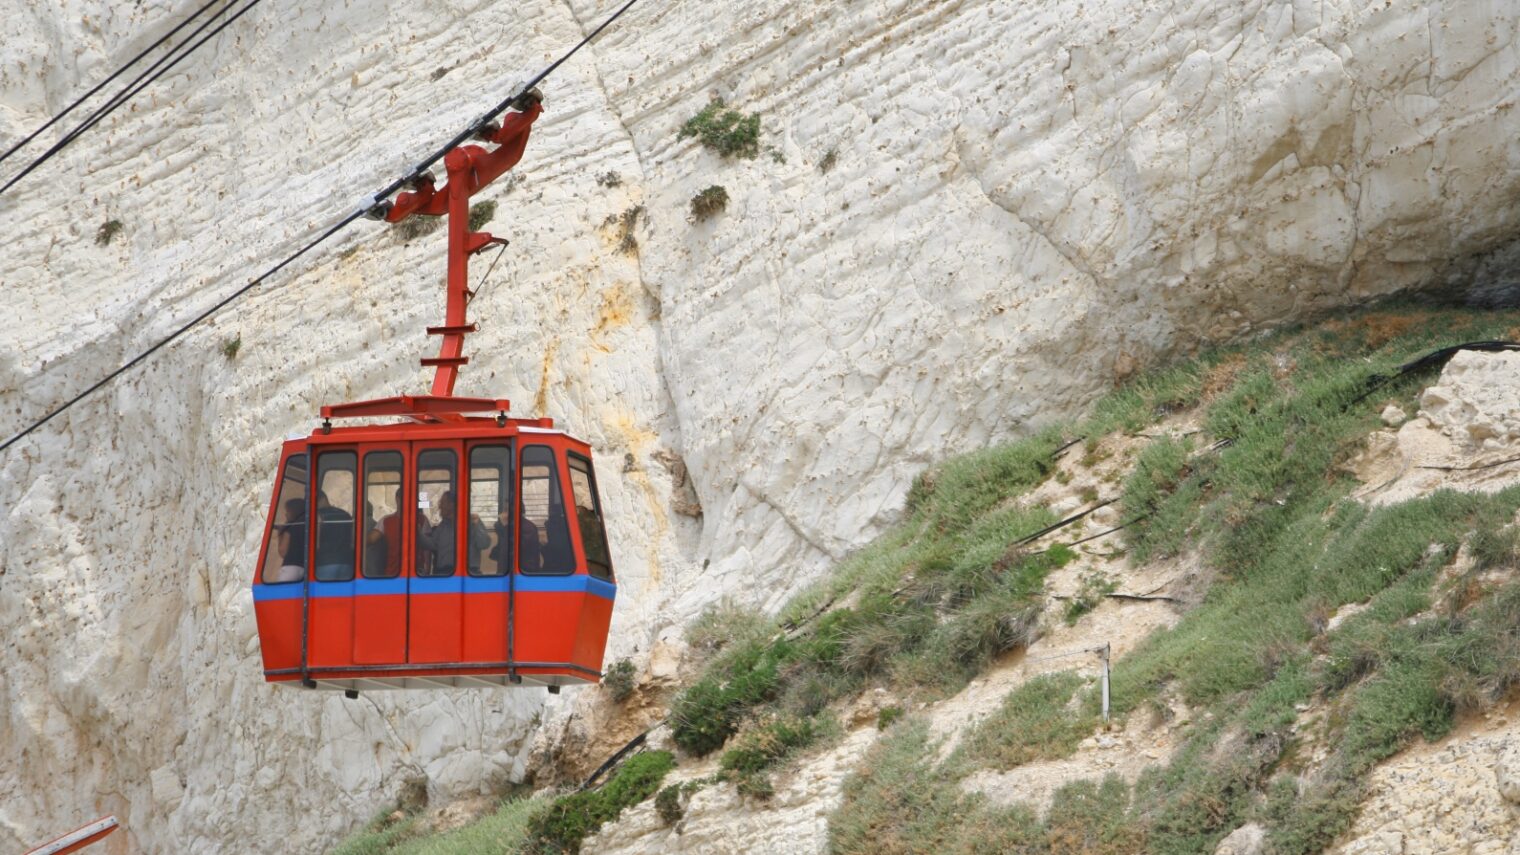 Rosh Hanikra cable car photo via Shutterstock.com